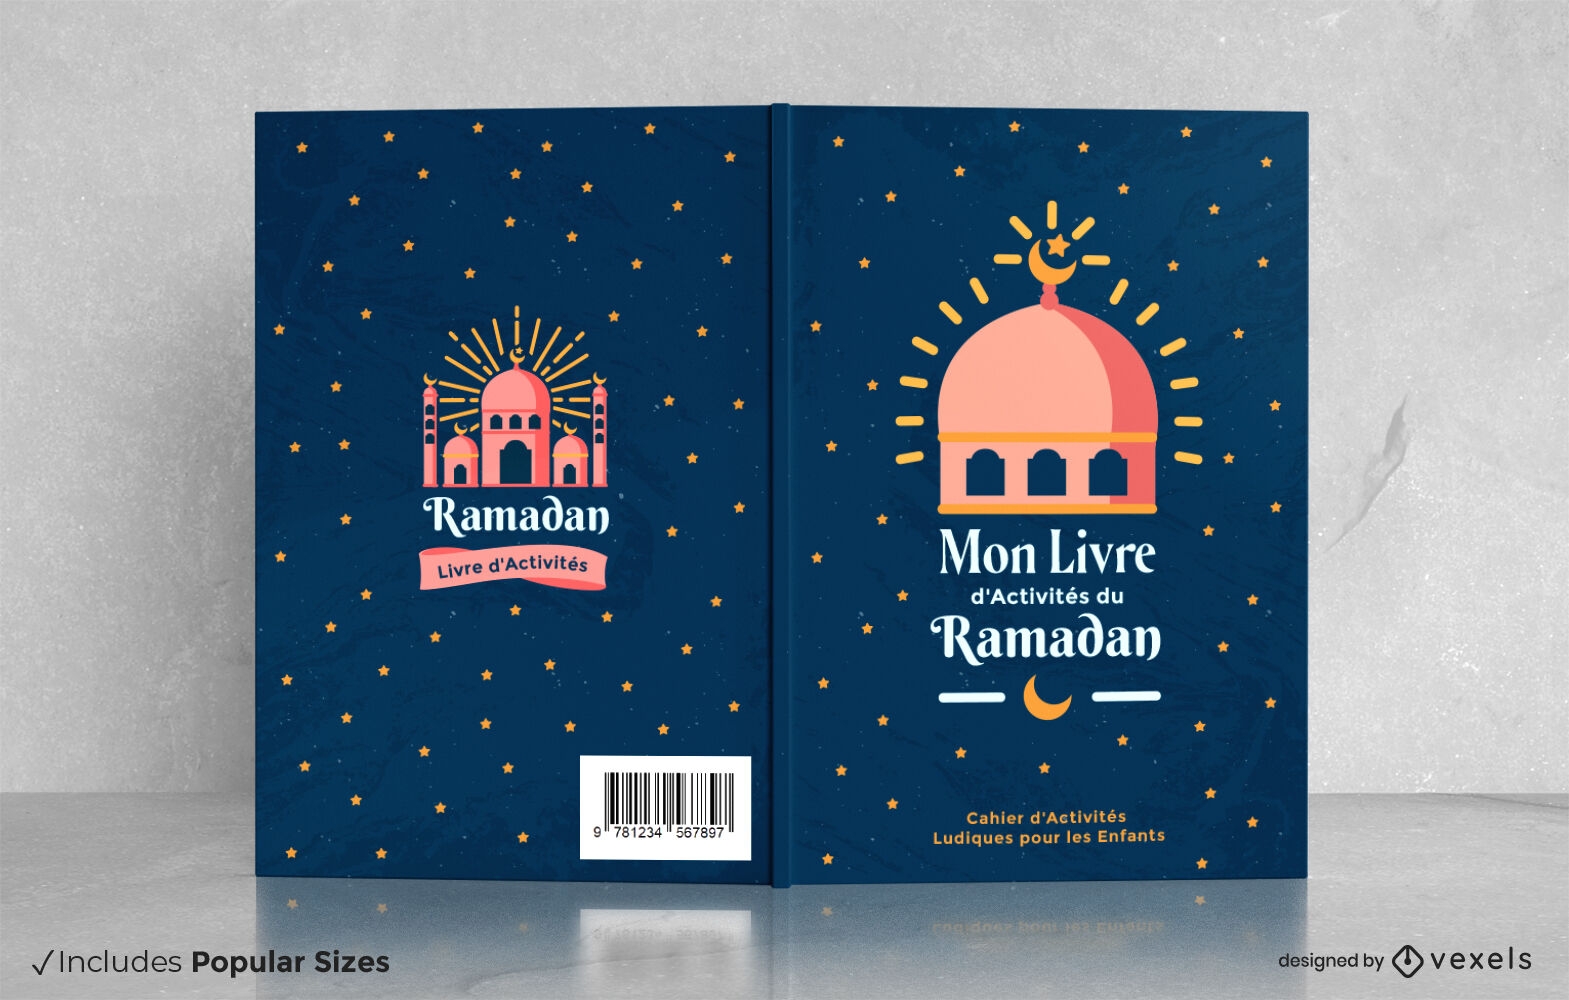 Buchcover-Design f?r Ramadan-Urlaubsaktivit?ten